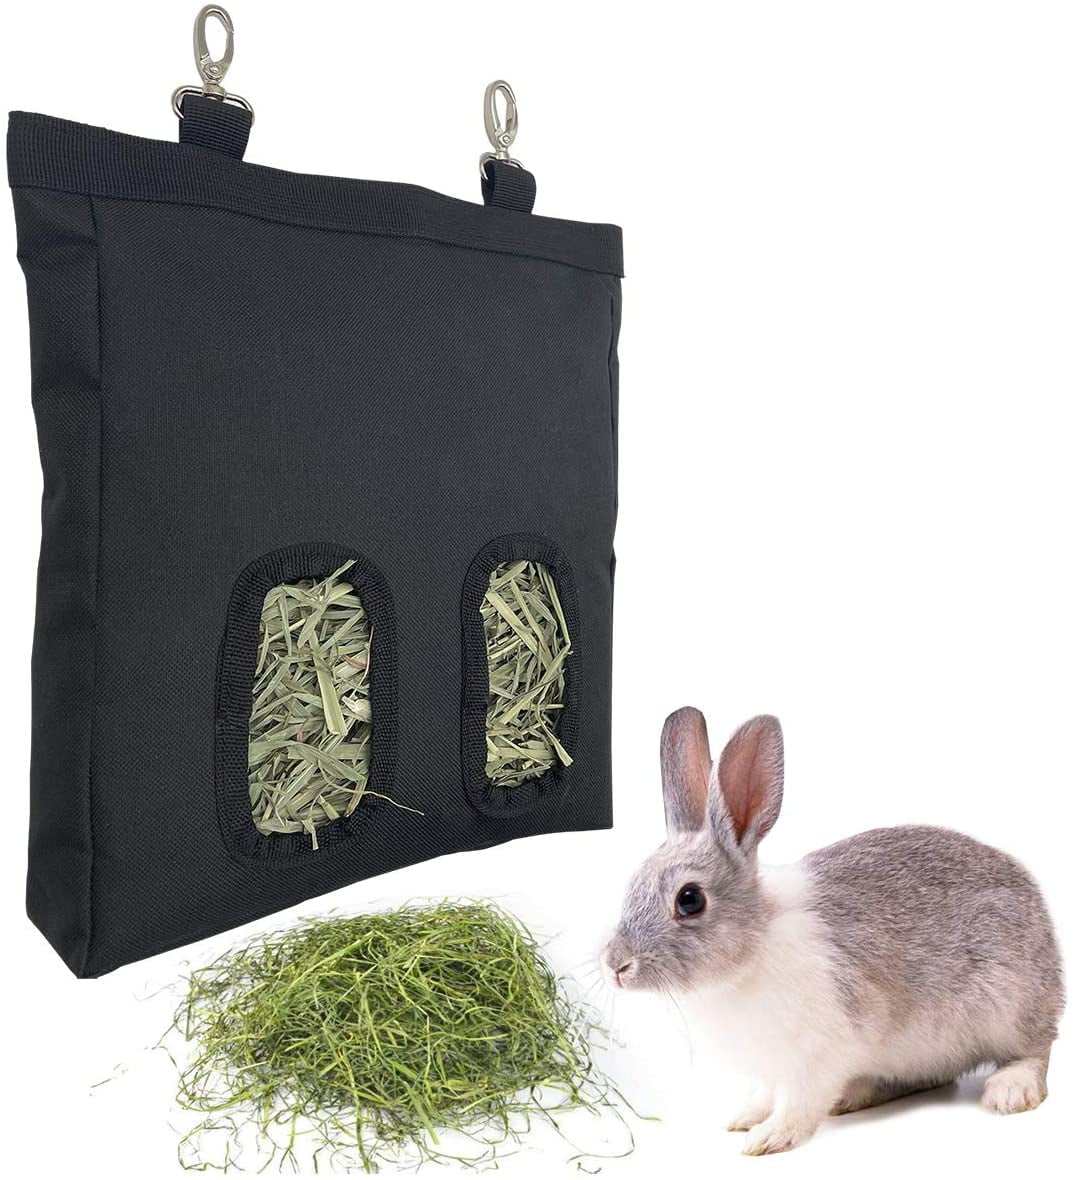 Hay Feeder Bag Black with Feeding Hole for Small Pets 600D Oxford Cloth with Two Feeding Holes Rabbit Feeding Bag